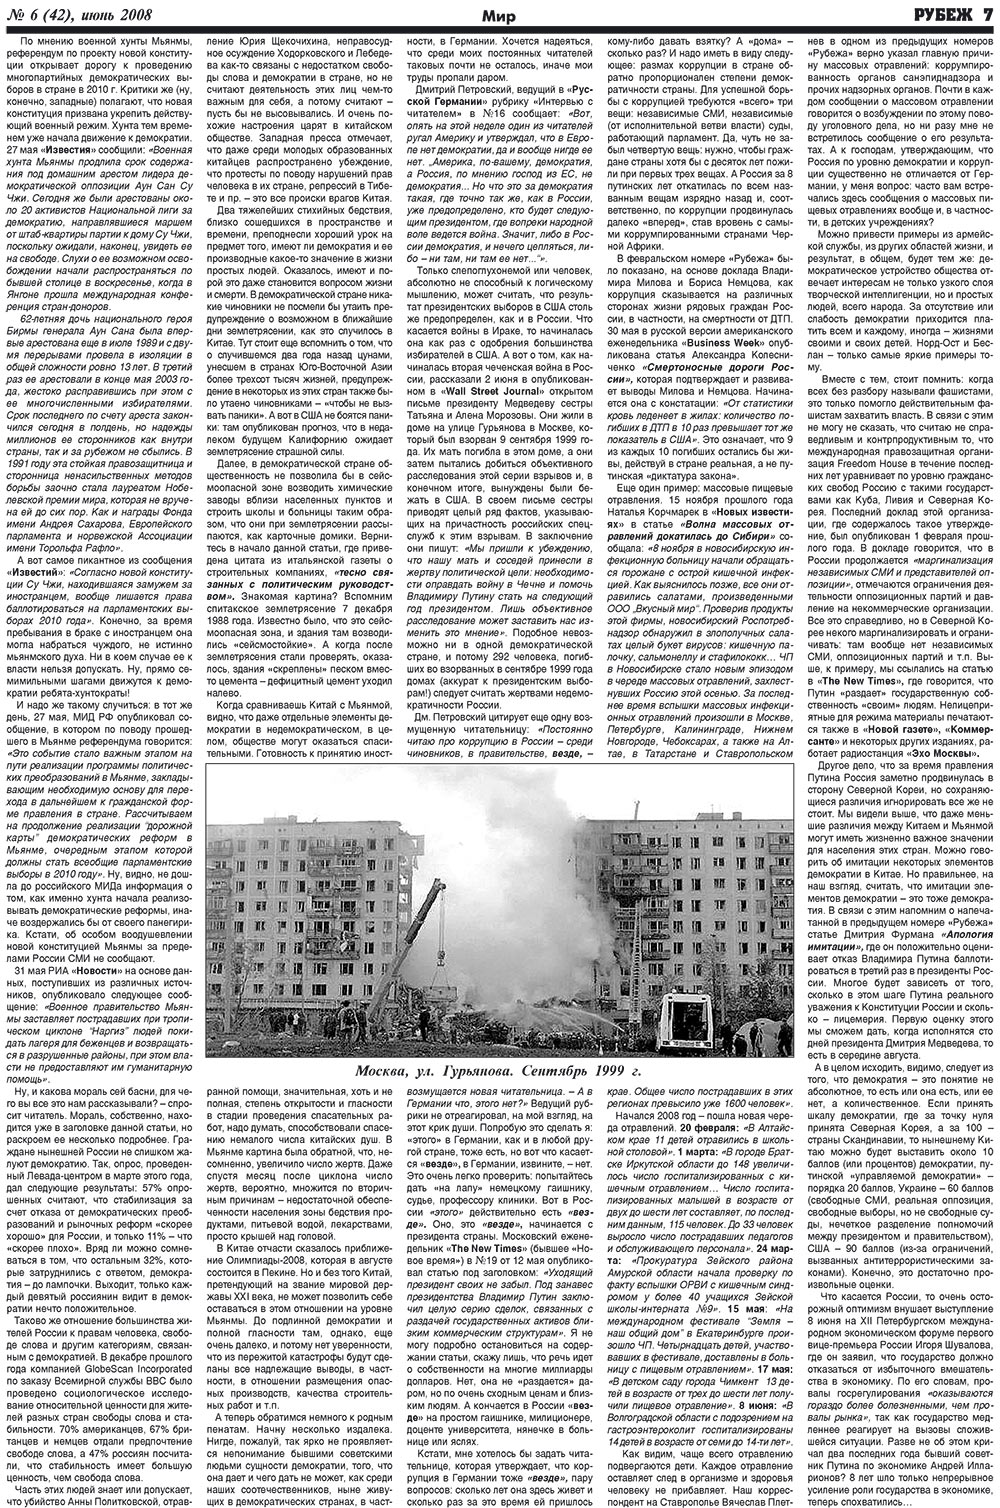 Рубеж, газета. 2008 №6 стр.7